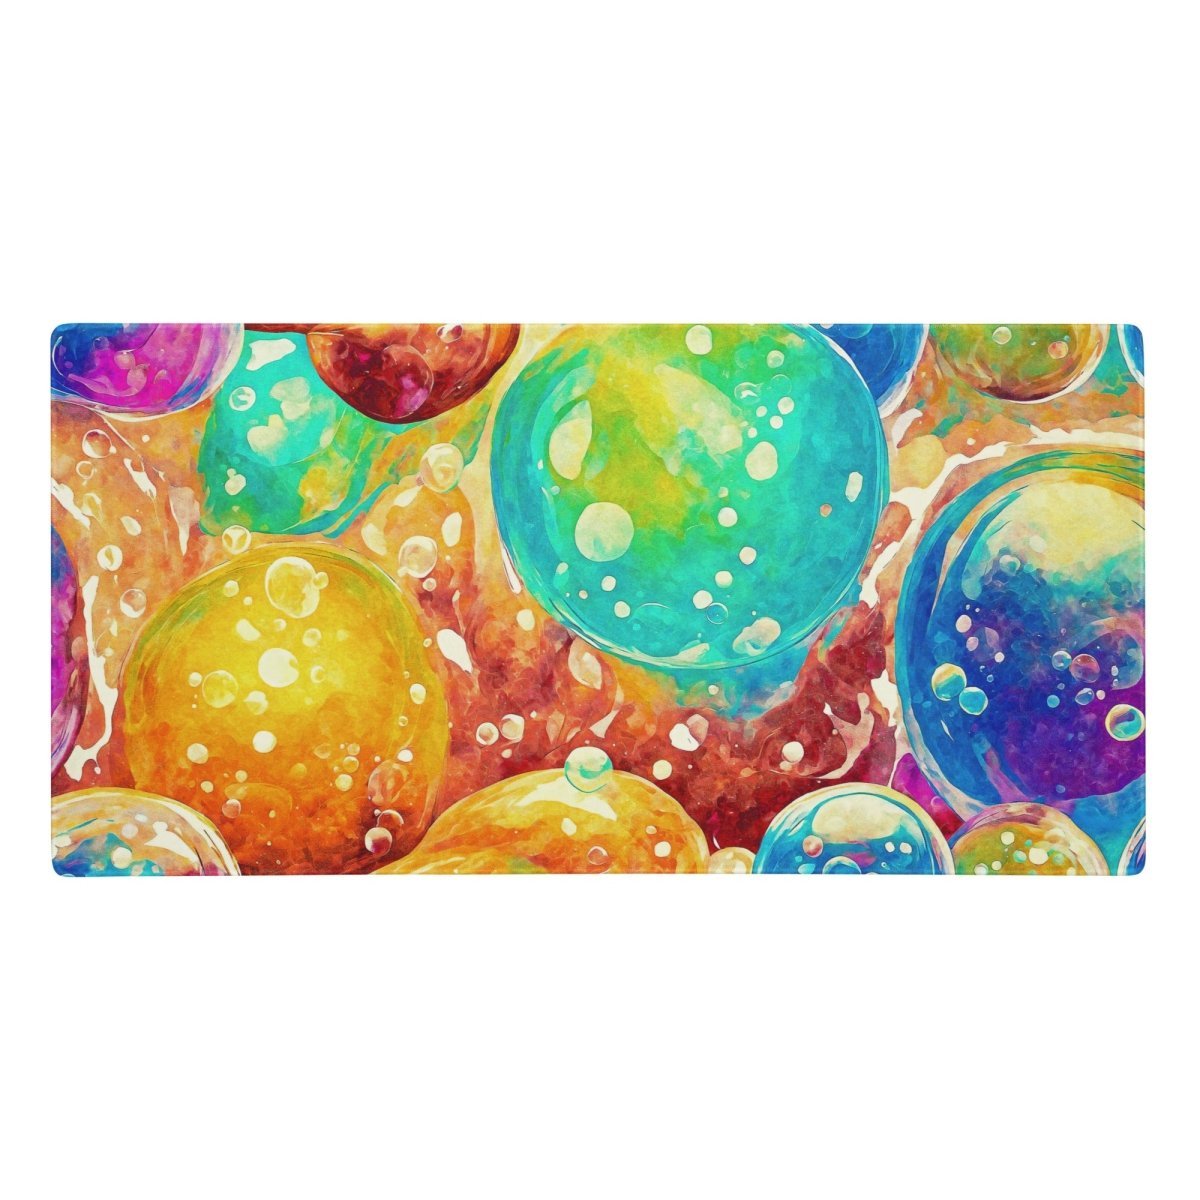 Bubblegum splash - Gaming mouse pad - Ever colorful